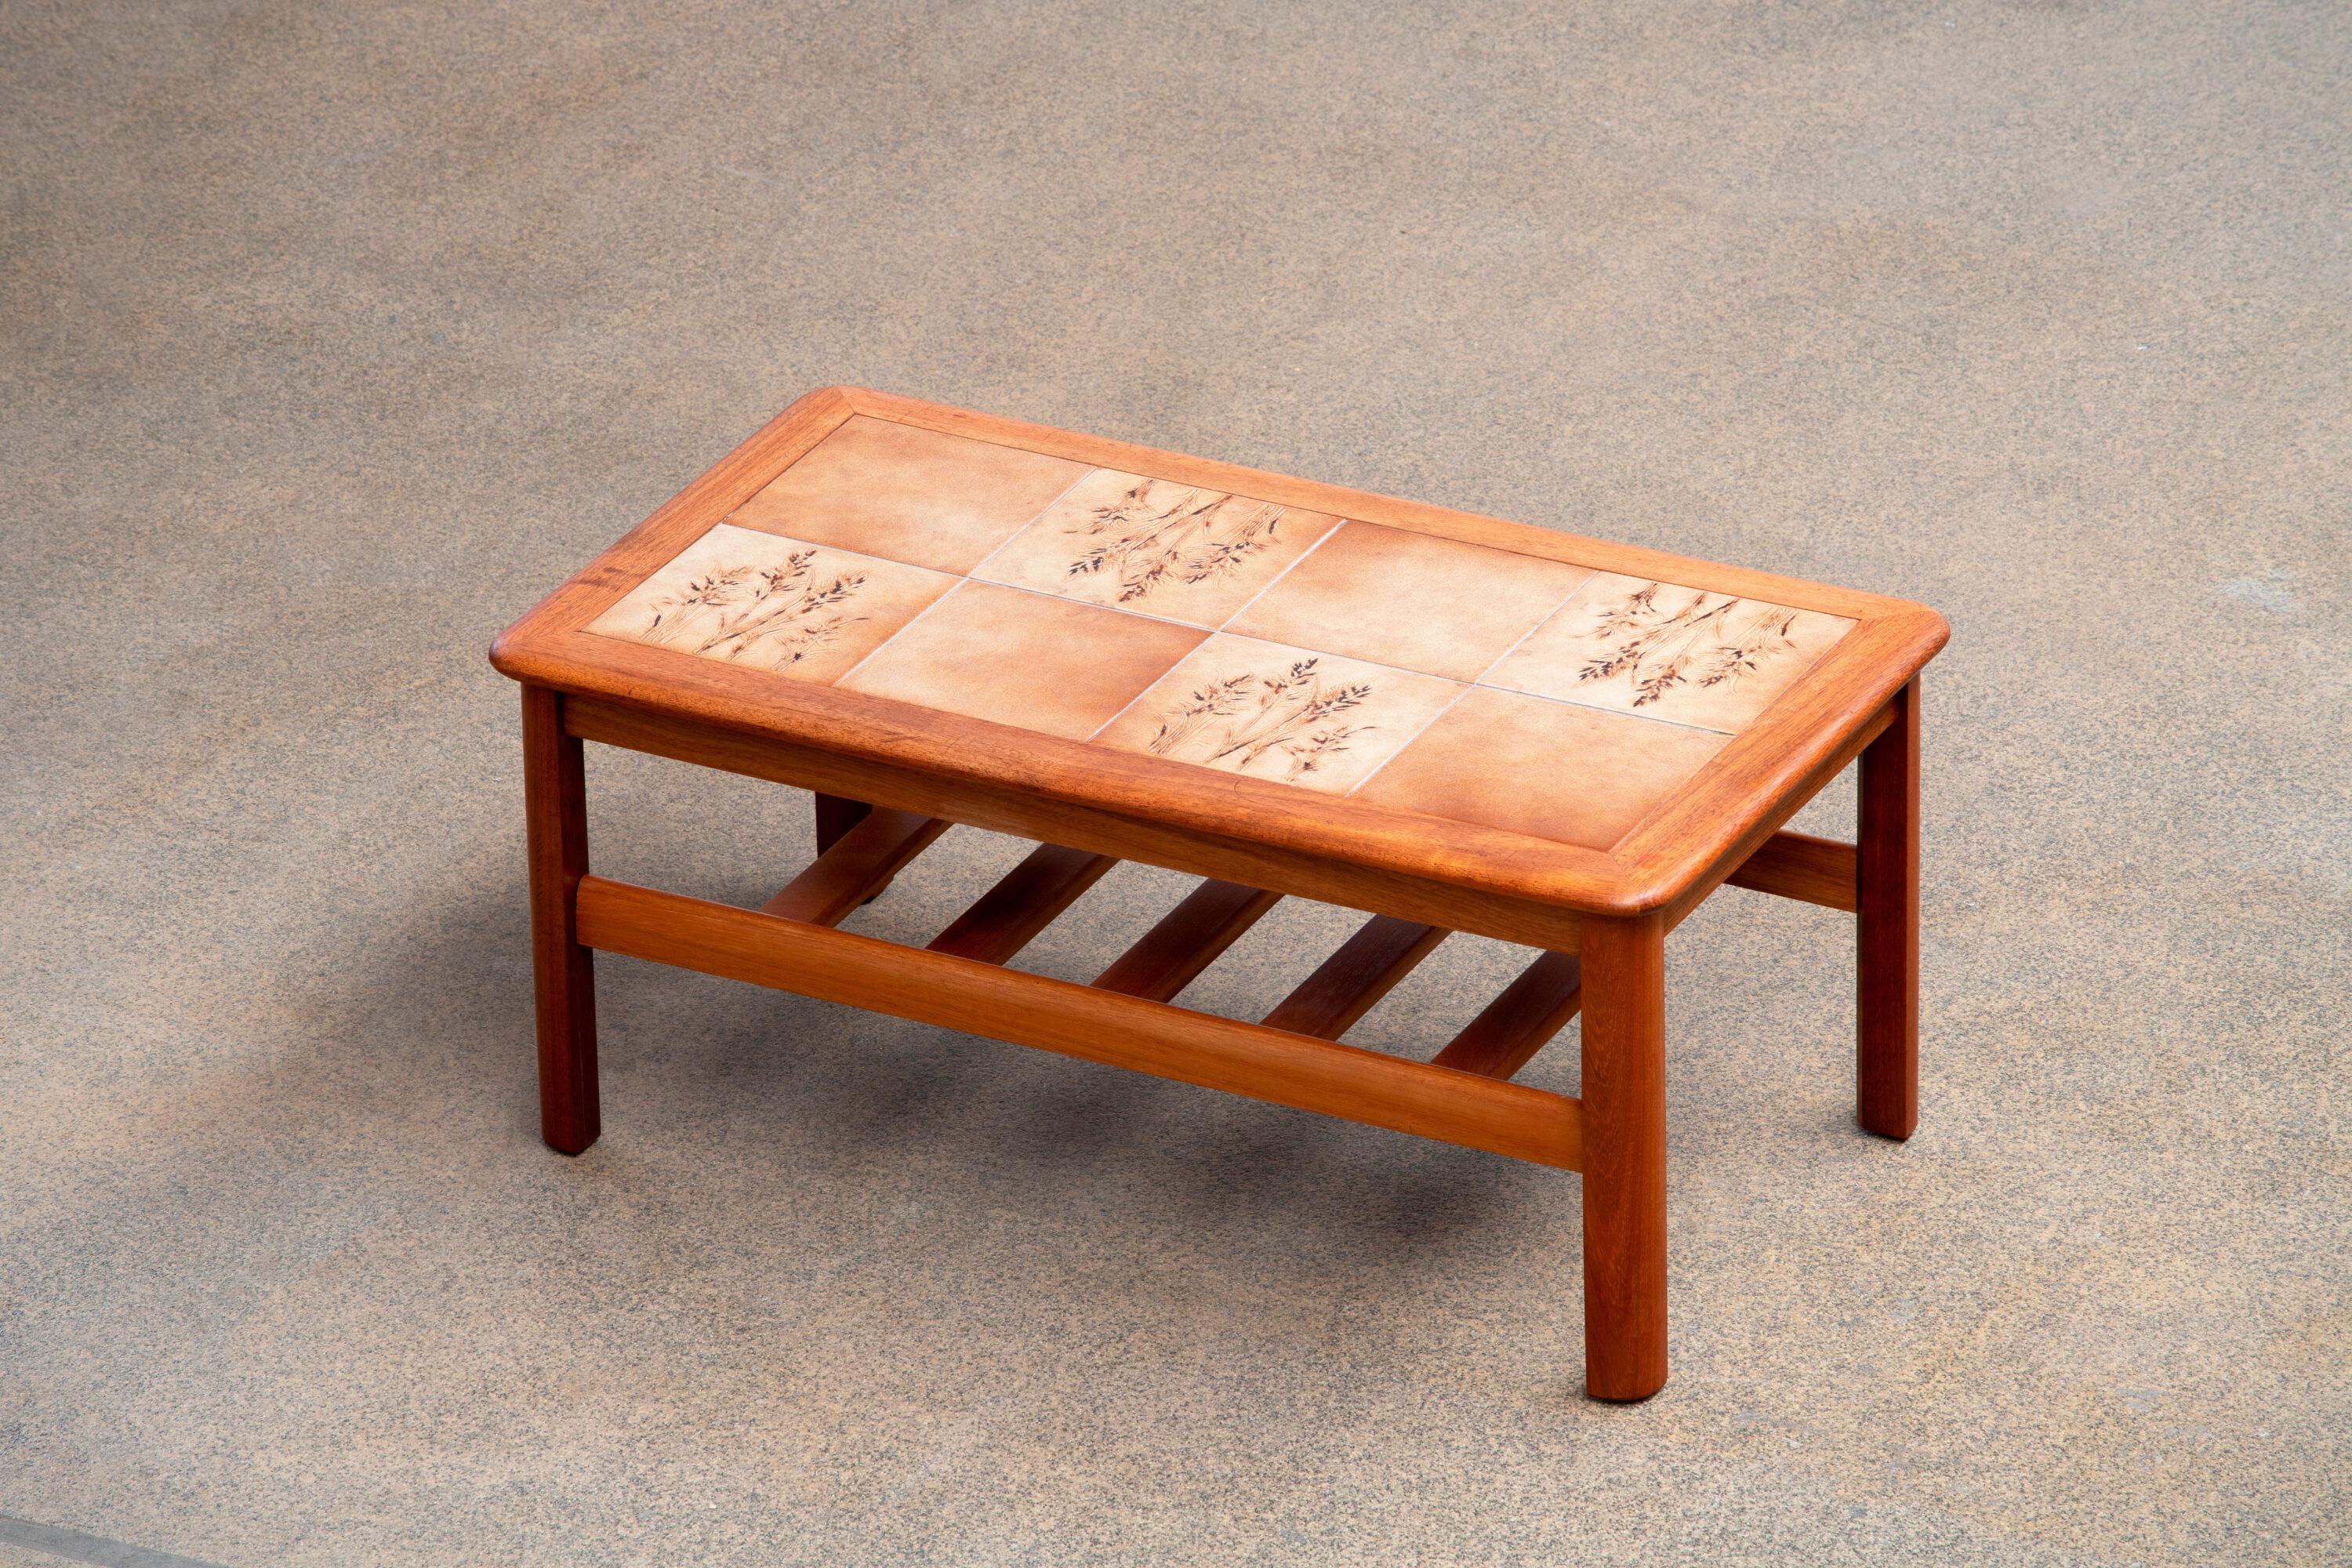 Mid-century coffee table in teak and ceramic.
1960s.